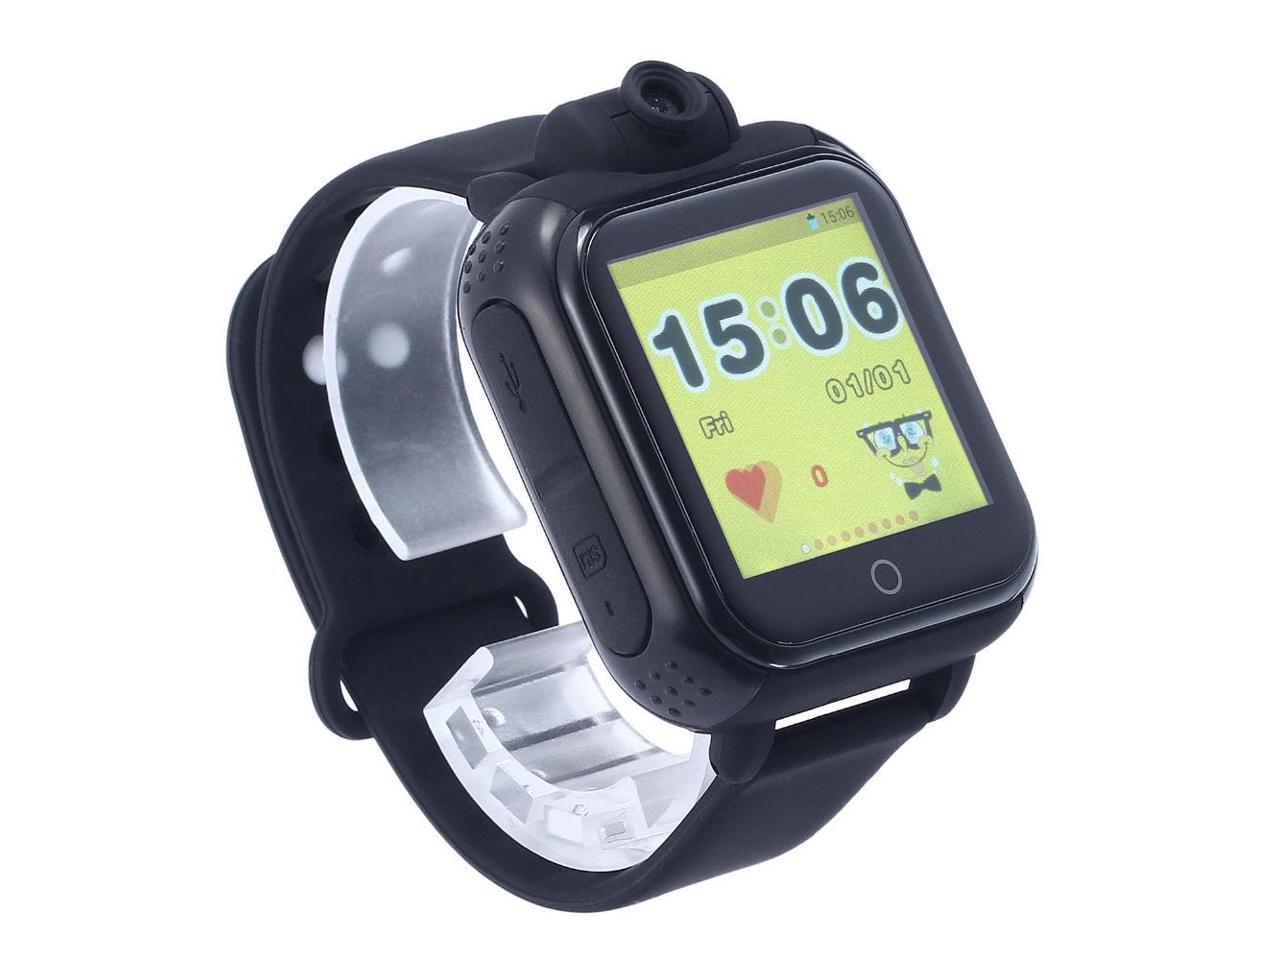 q730 smart watch